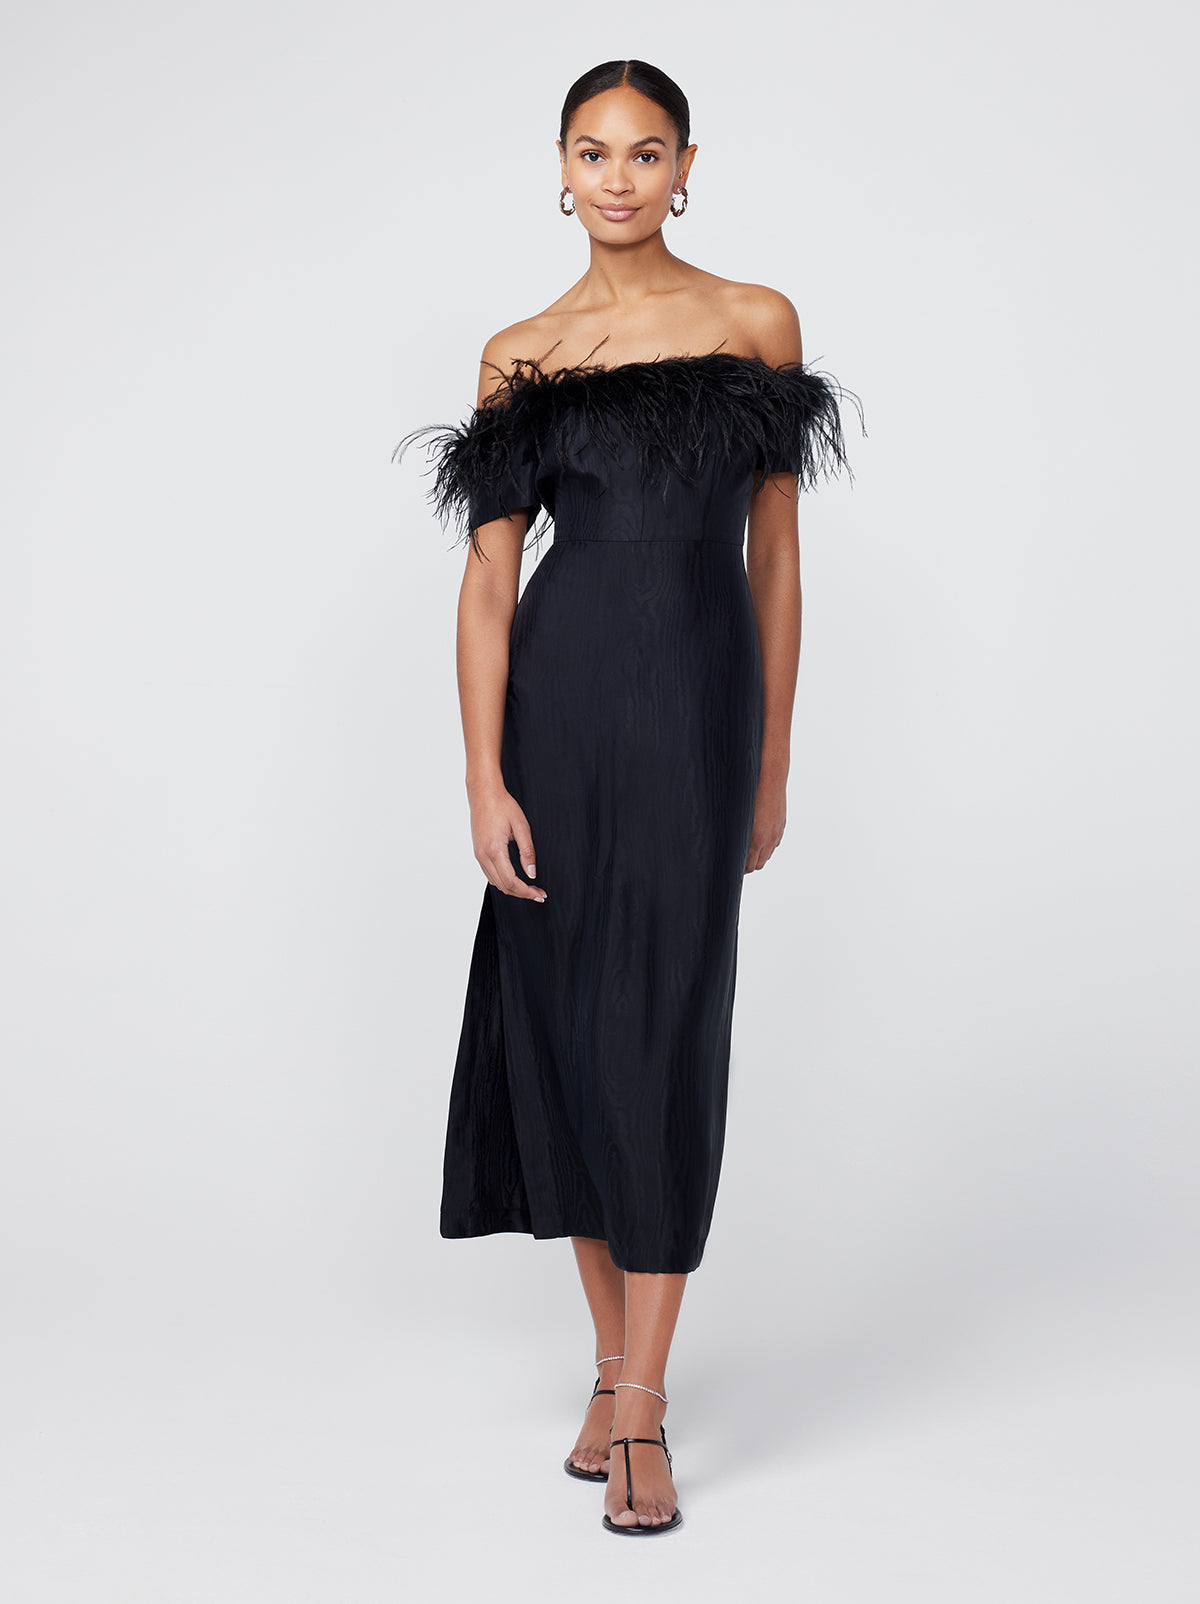 Vivien Black Feather Midi Dress By KITRI Studio